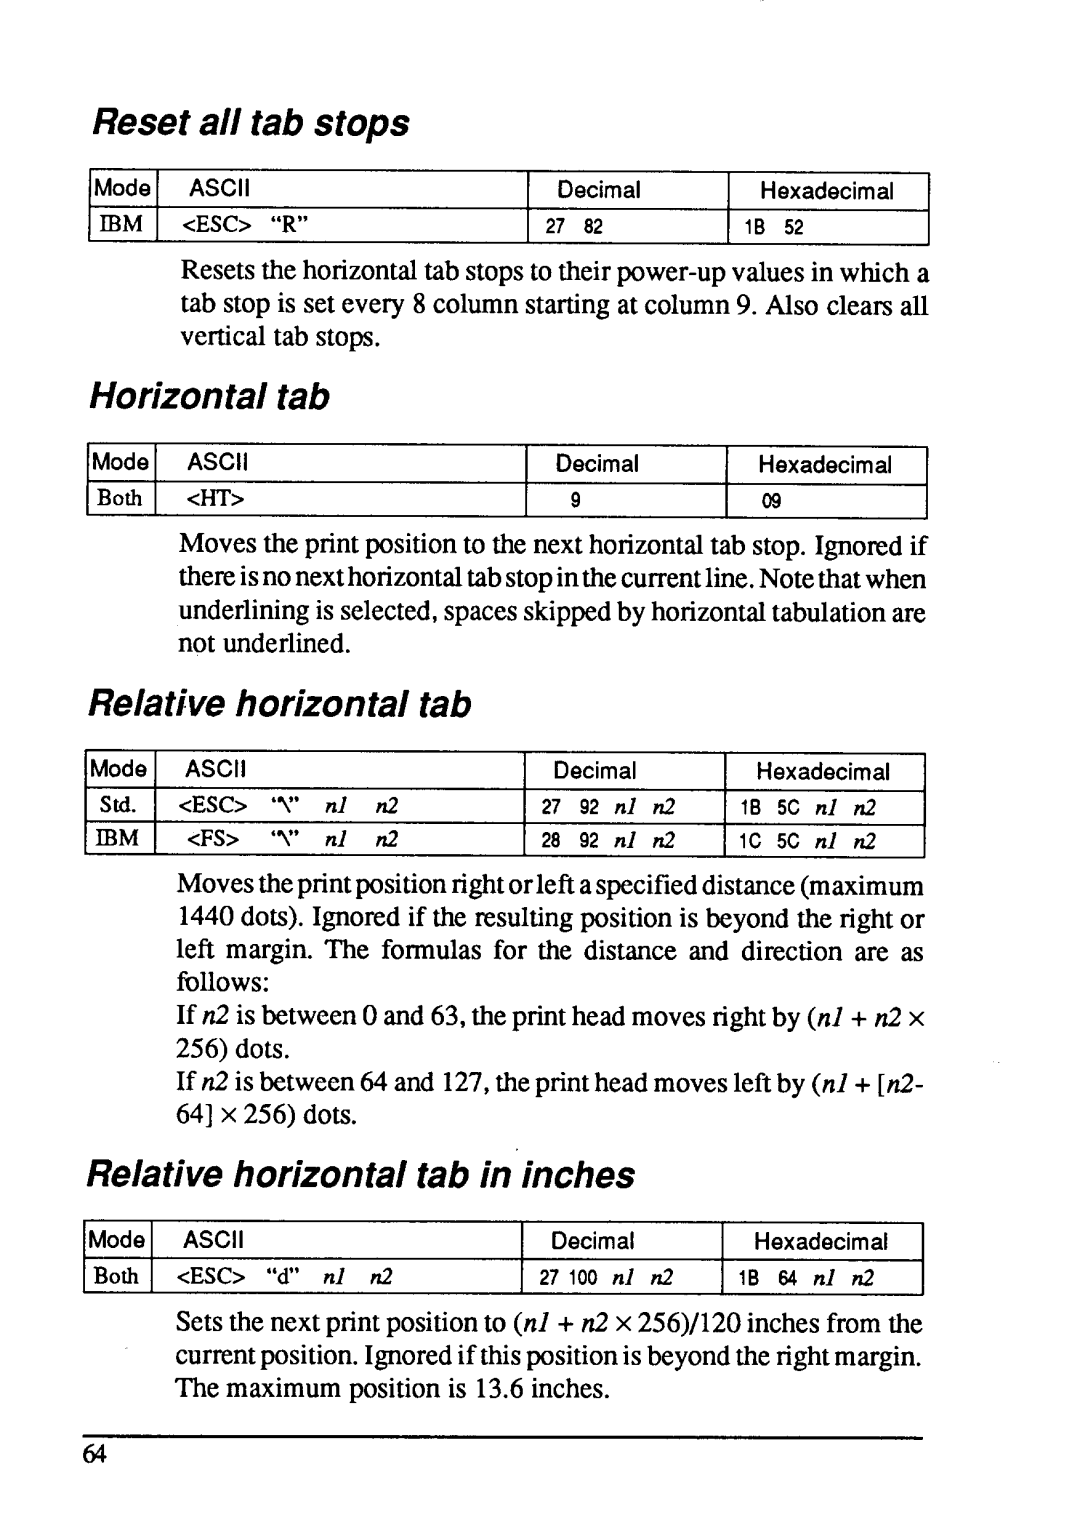 Star Micronics LC24-15 Reset all tab stops, Horizontal tab, Relative horizontal tab in inches, Esc “R”, I-It 